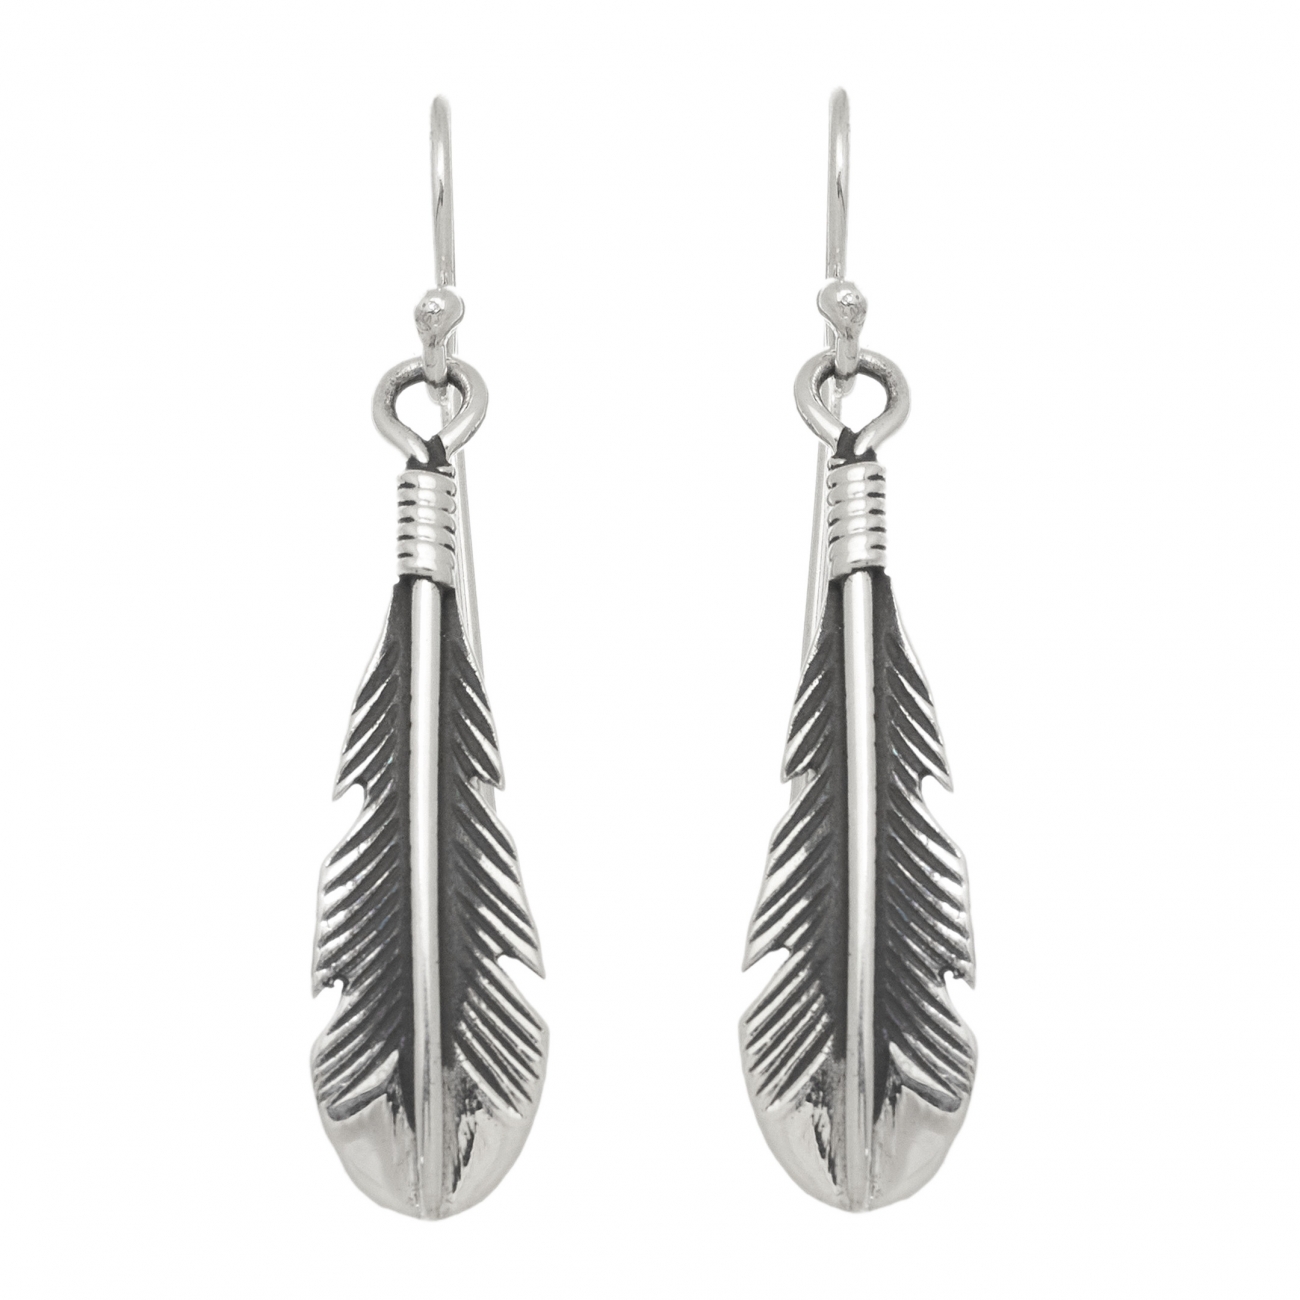 Harpo Paris earrings BOw30 silver feathers